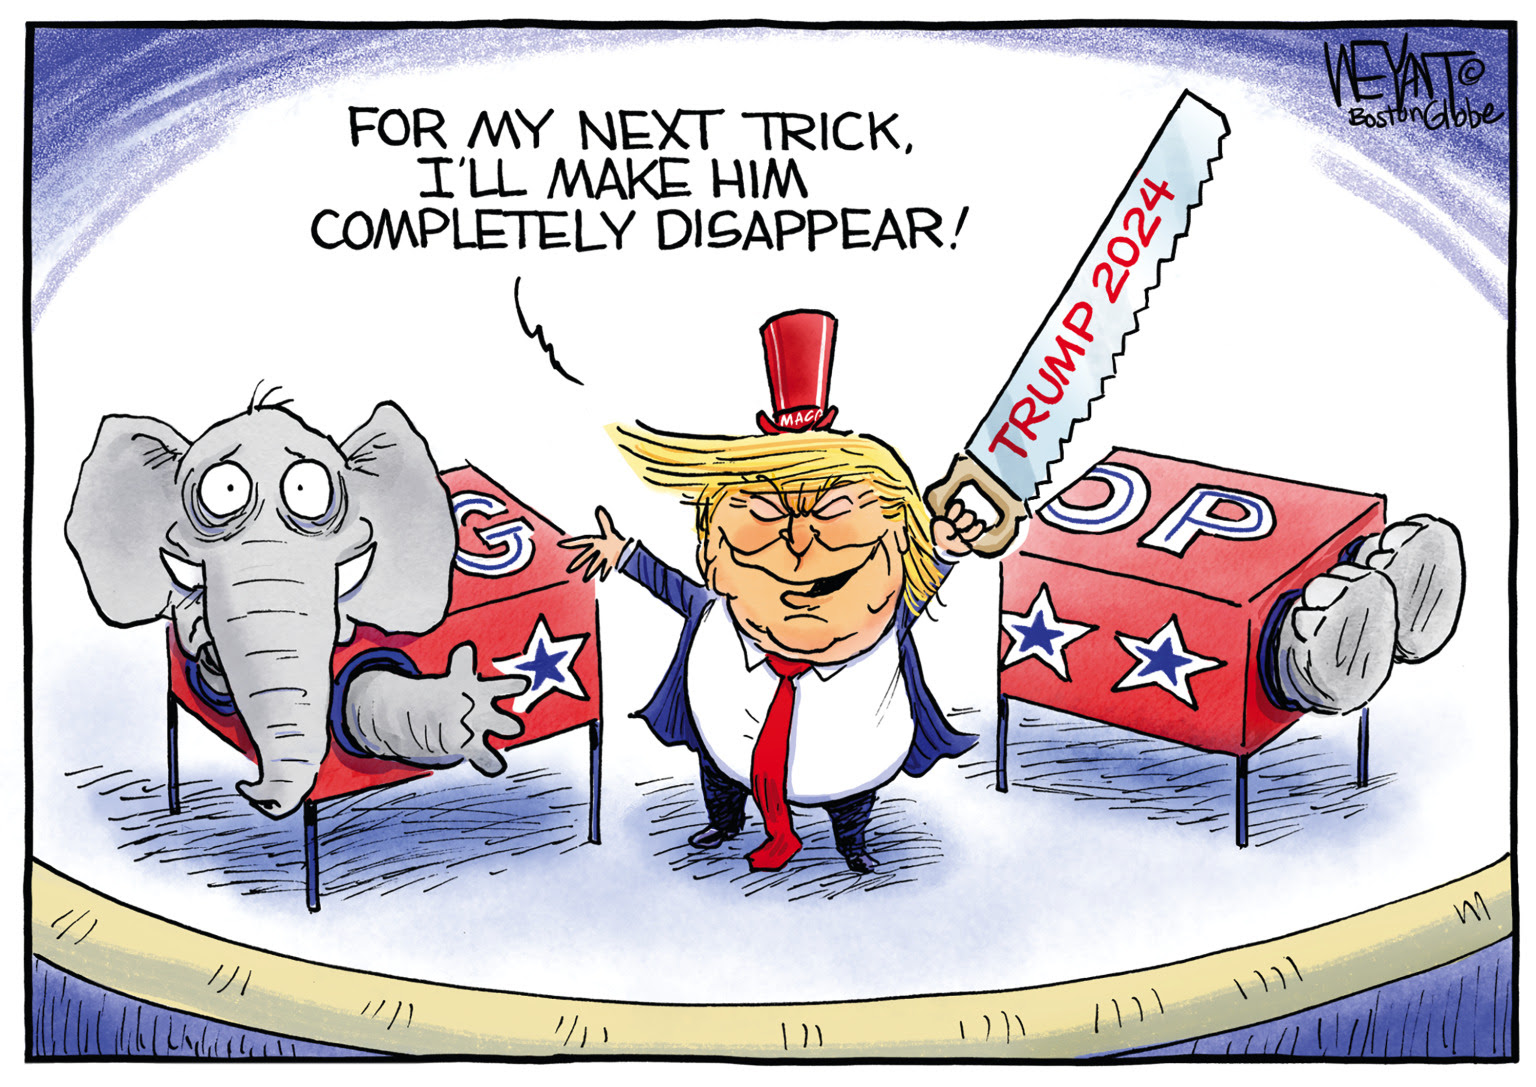 Trump leads MAGA Republicans